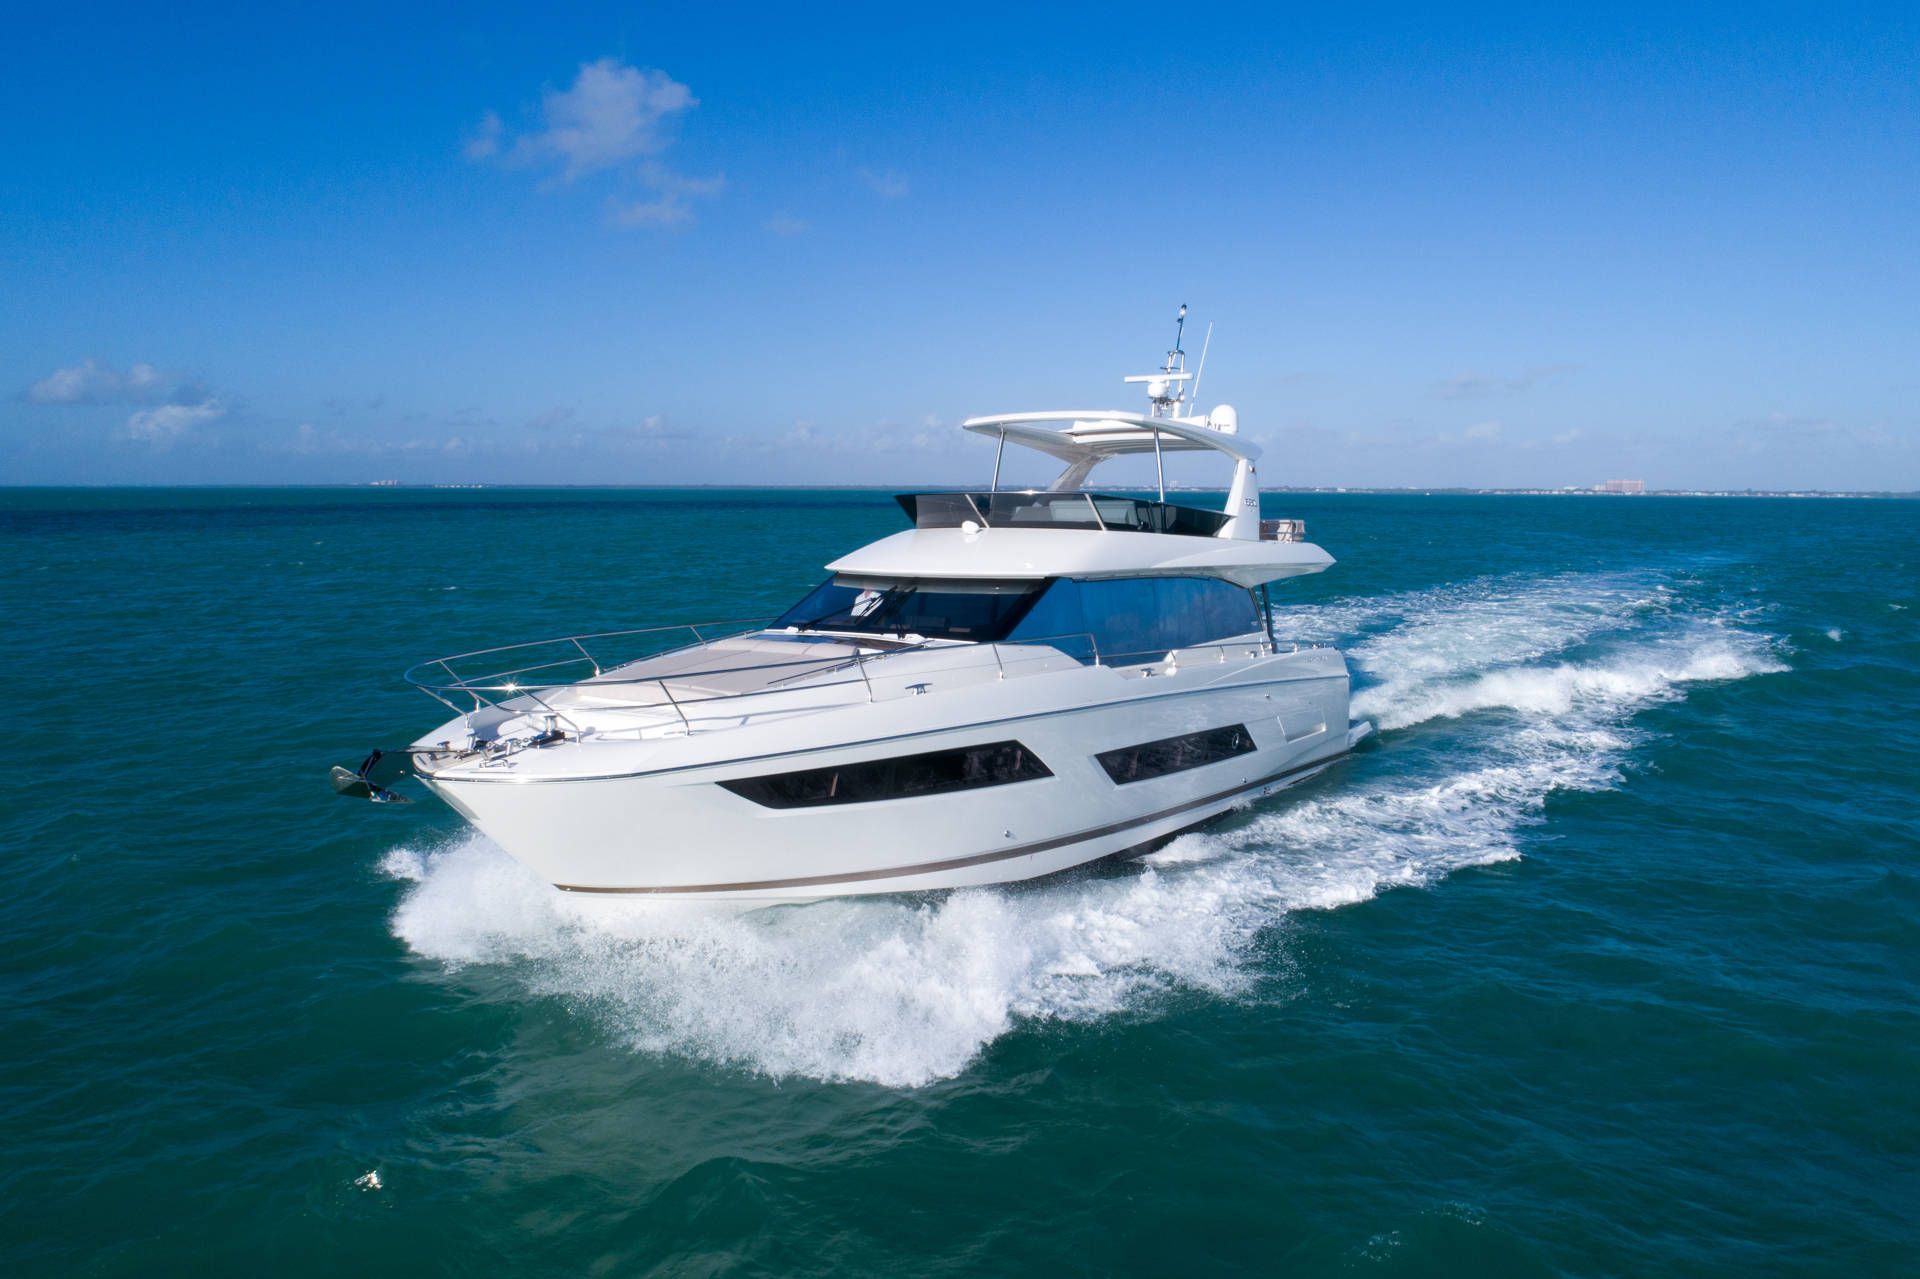 Power boat FOR CHARTER, year 2019 brand Prestige and model 680, available in Real Club Náutico de Palma Palma Mallorca España